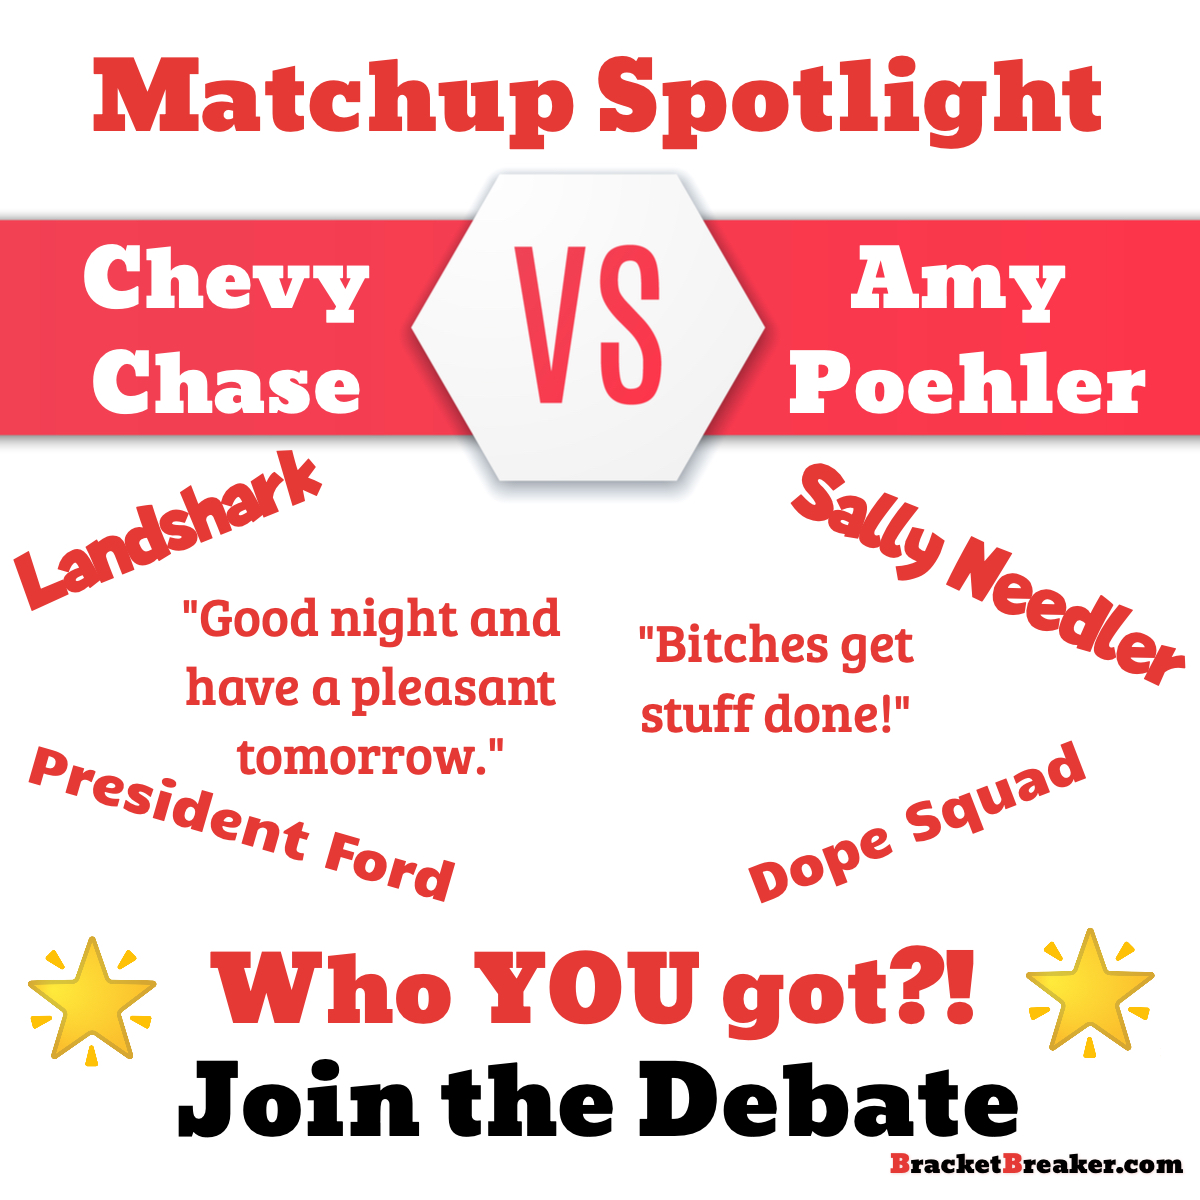 Matchup Spotlight - Chevy Chase vs. Amy Poehler - Who You Got?